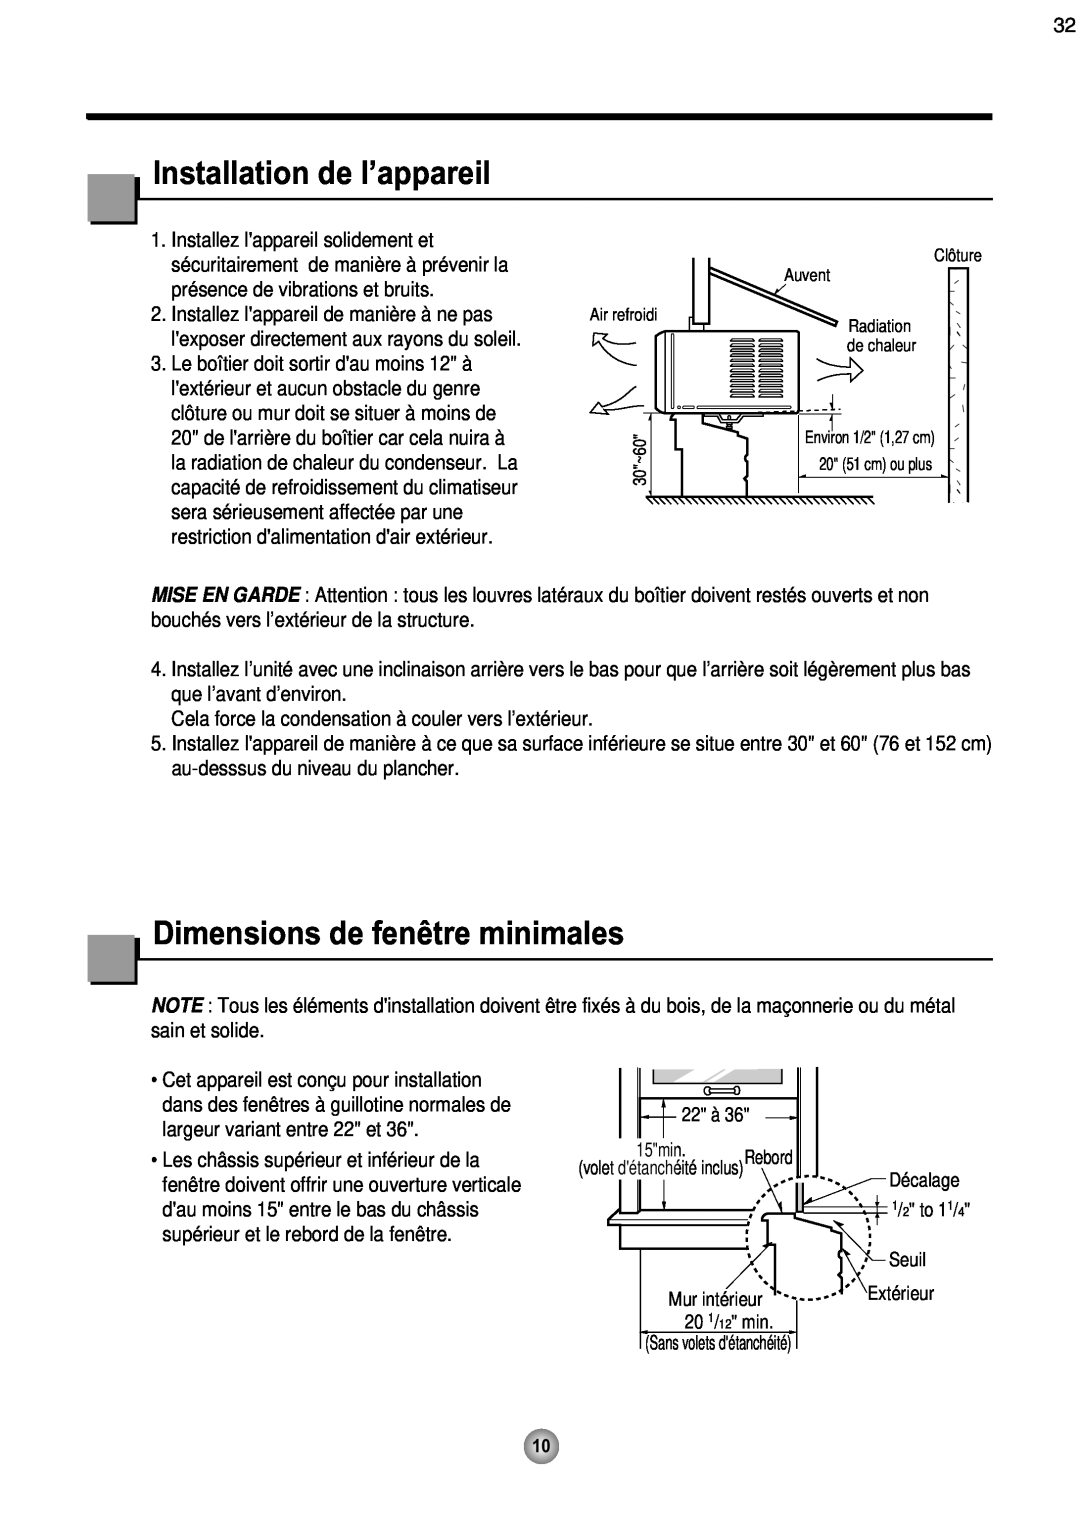 Friedrich ZQ10, ZQ08 operation manual Installation de l’appareil, Dimensions de fenêtre minimales 